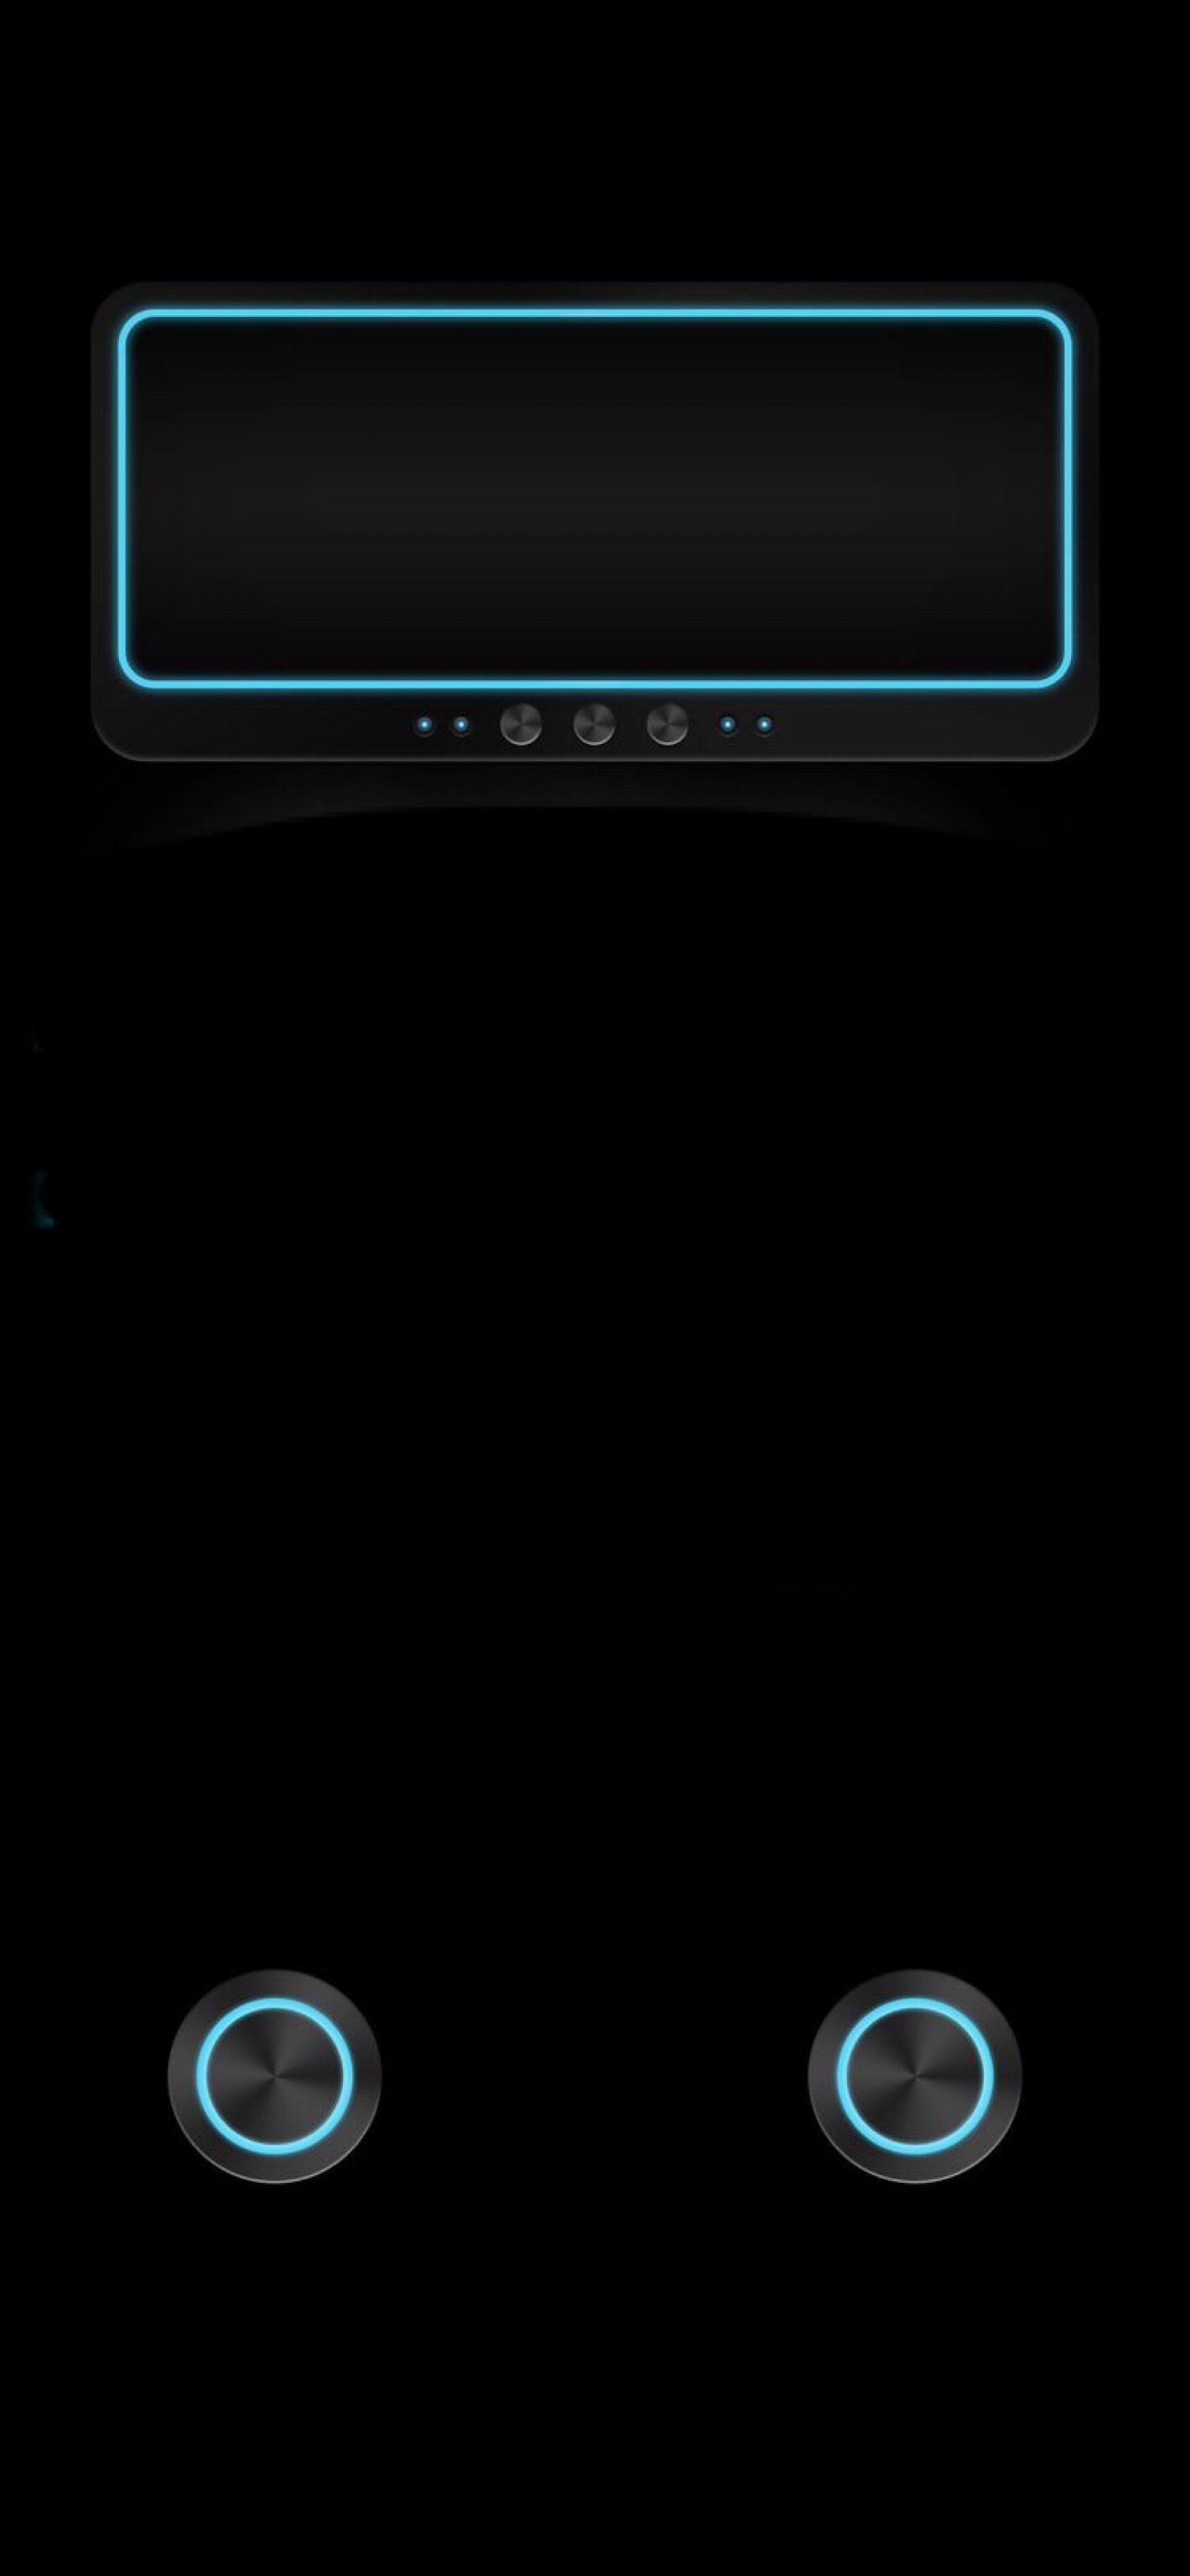 plantilla de fondo de pantalla de iphone,texto,tecnología,artilugio,fuente,captura de pantalla